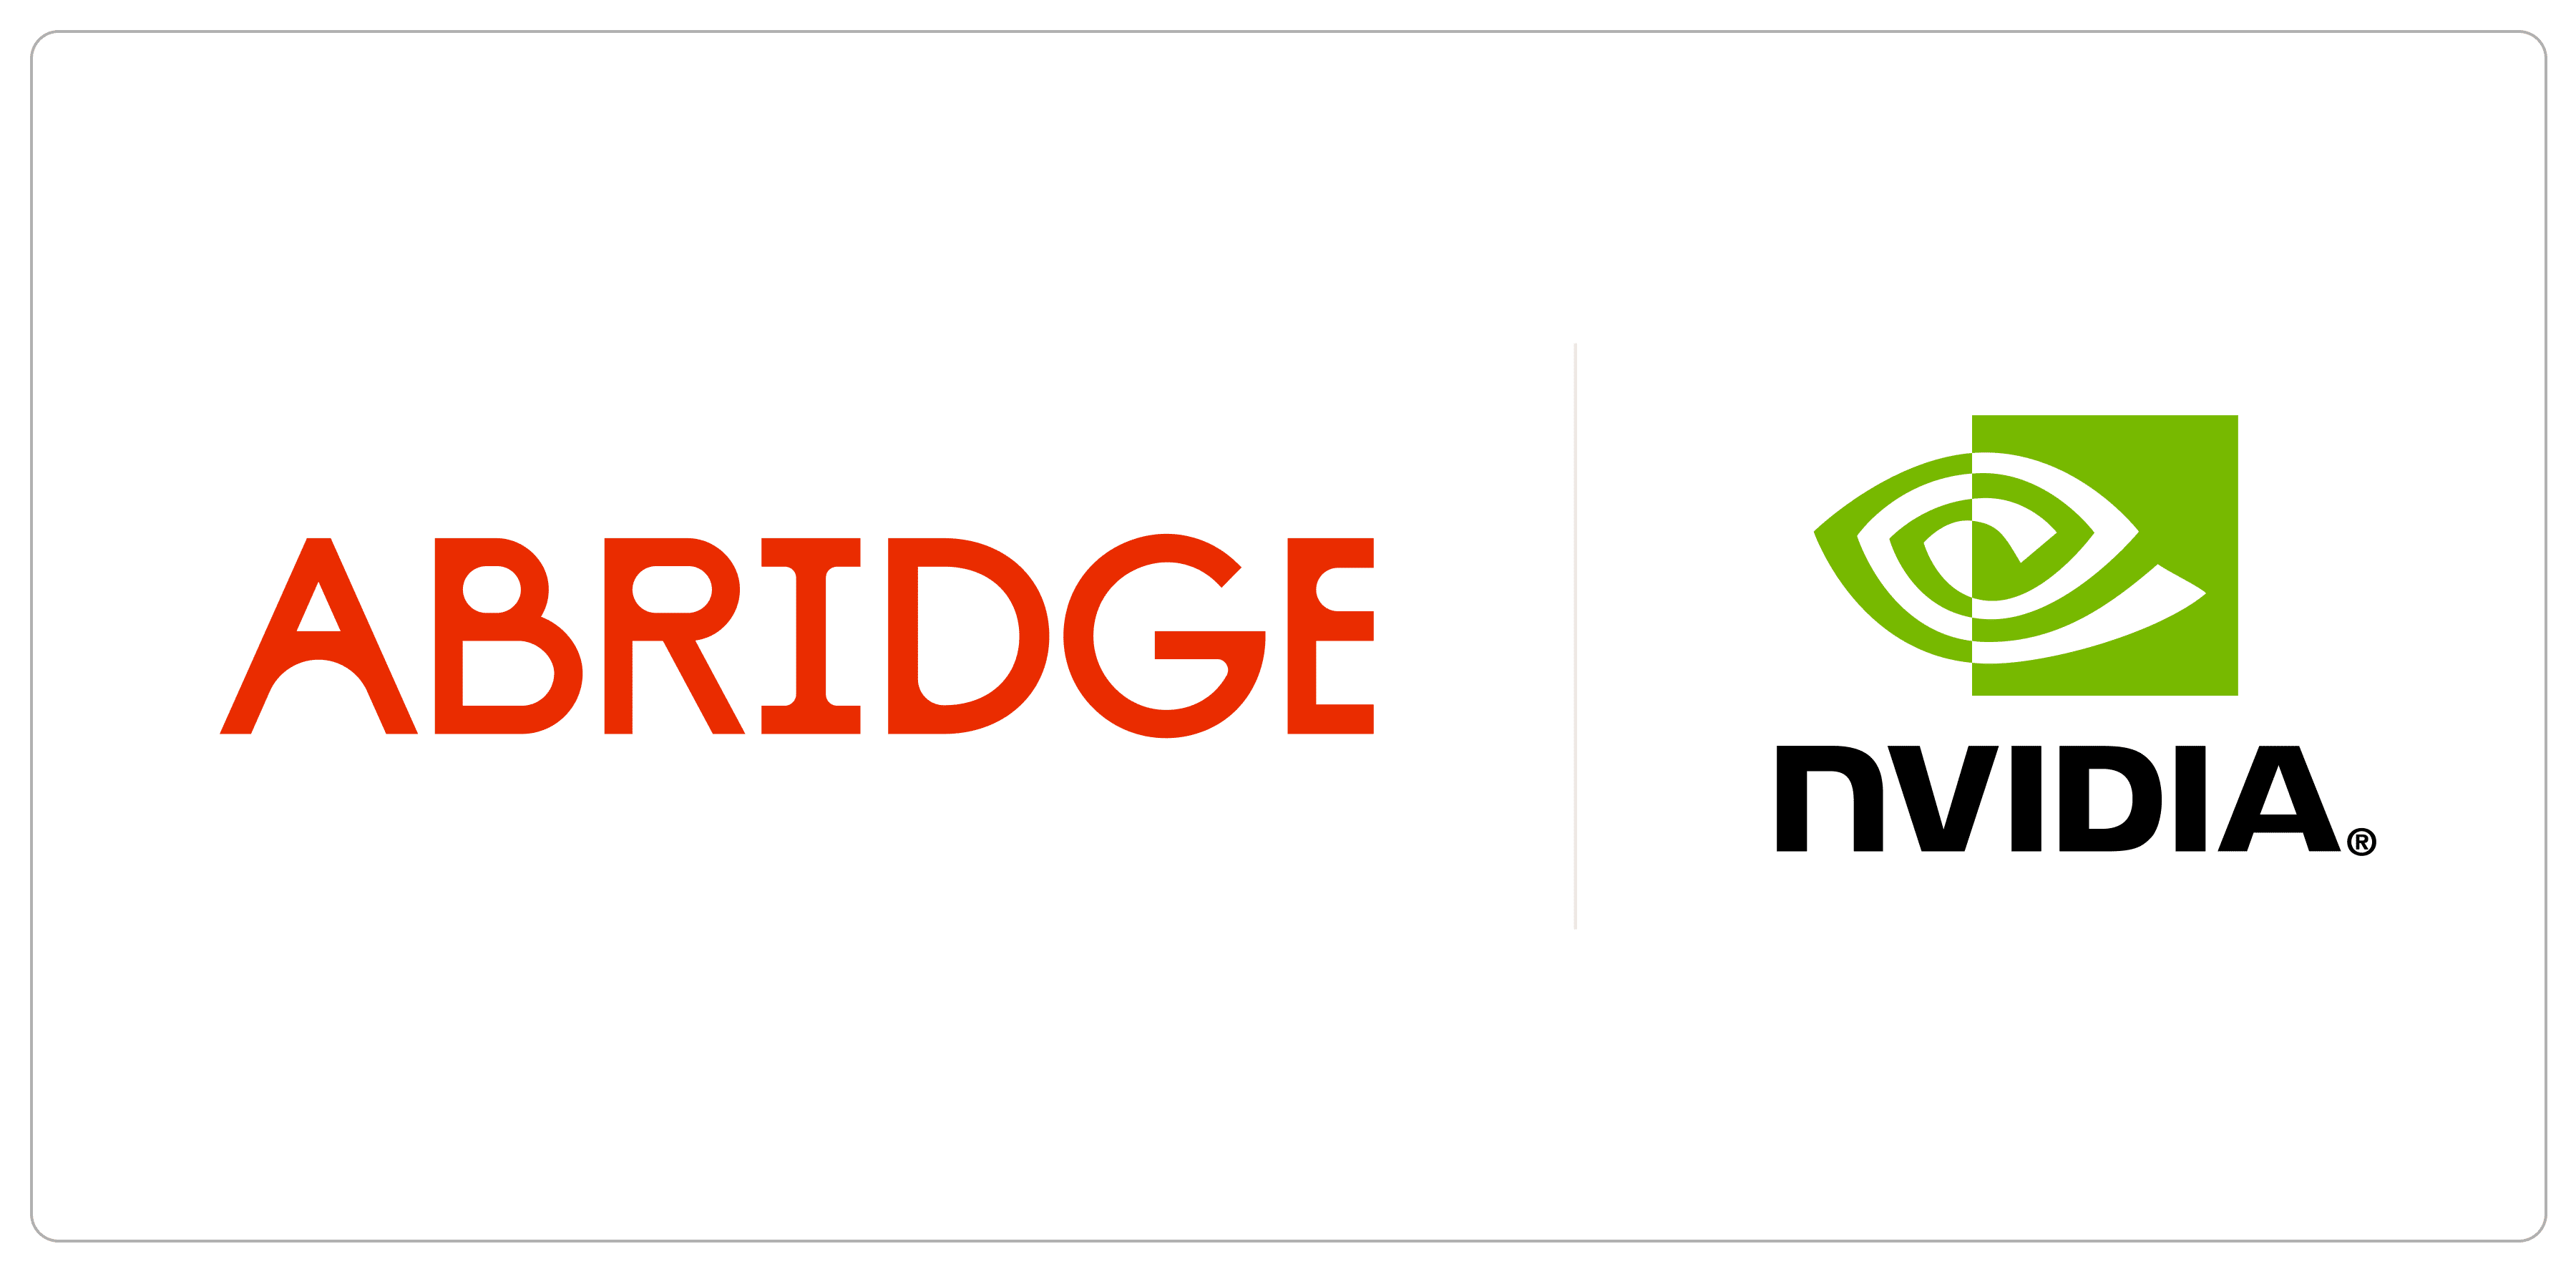 Abridge & NVIDIA Partner to Supercharge AI-powered Clinical Documentation